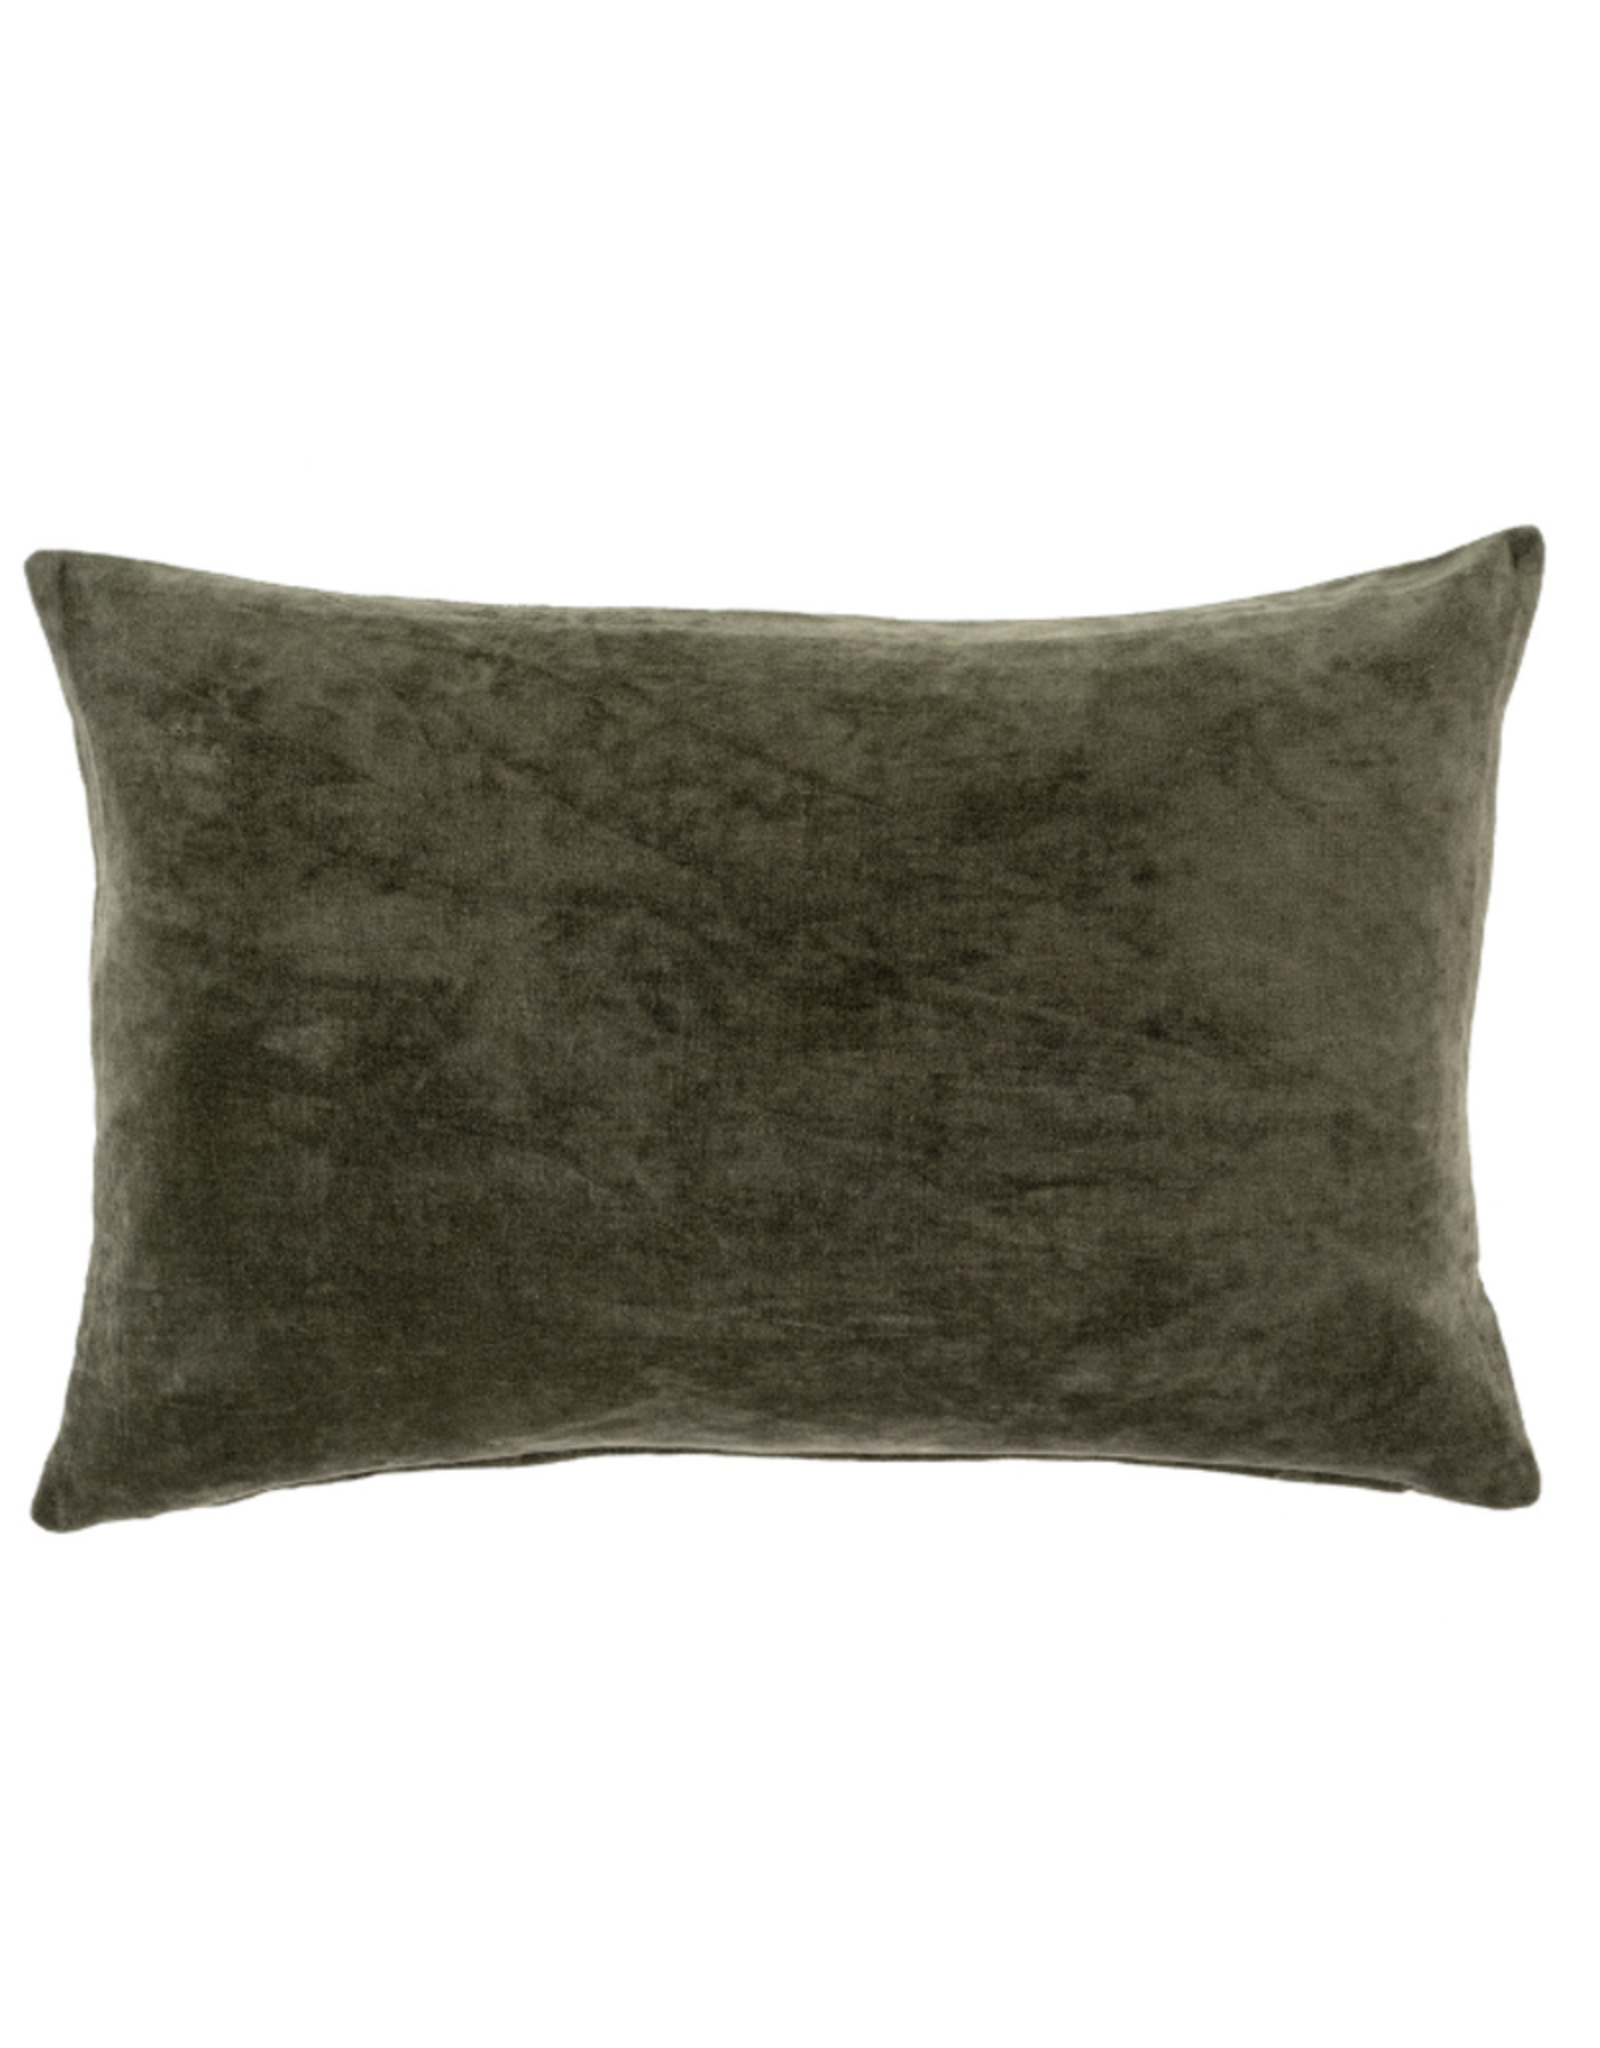 Vera Velvet Pillow - 16" x 24" - Cypress